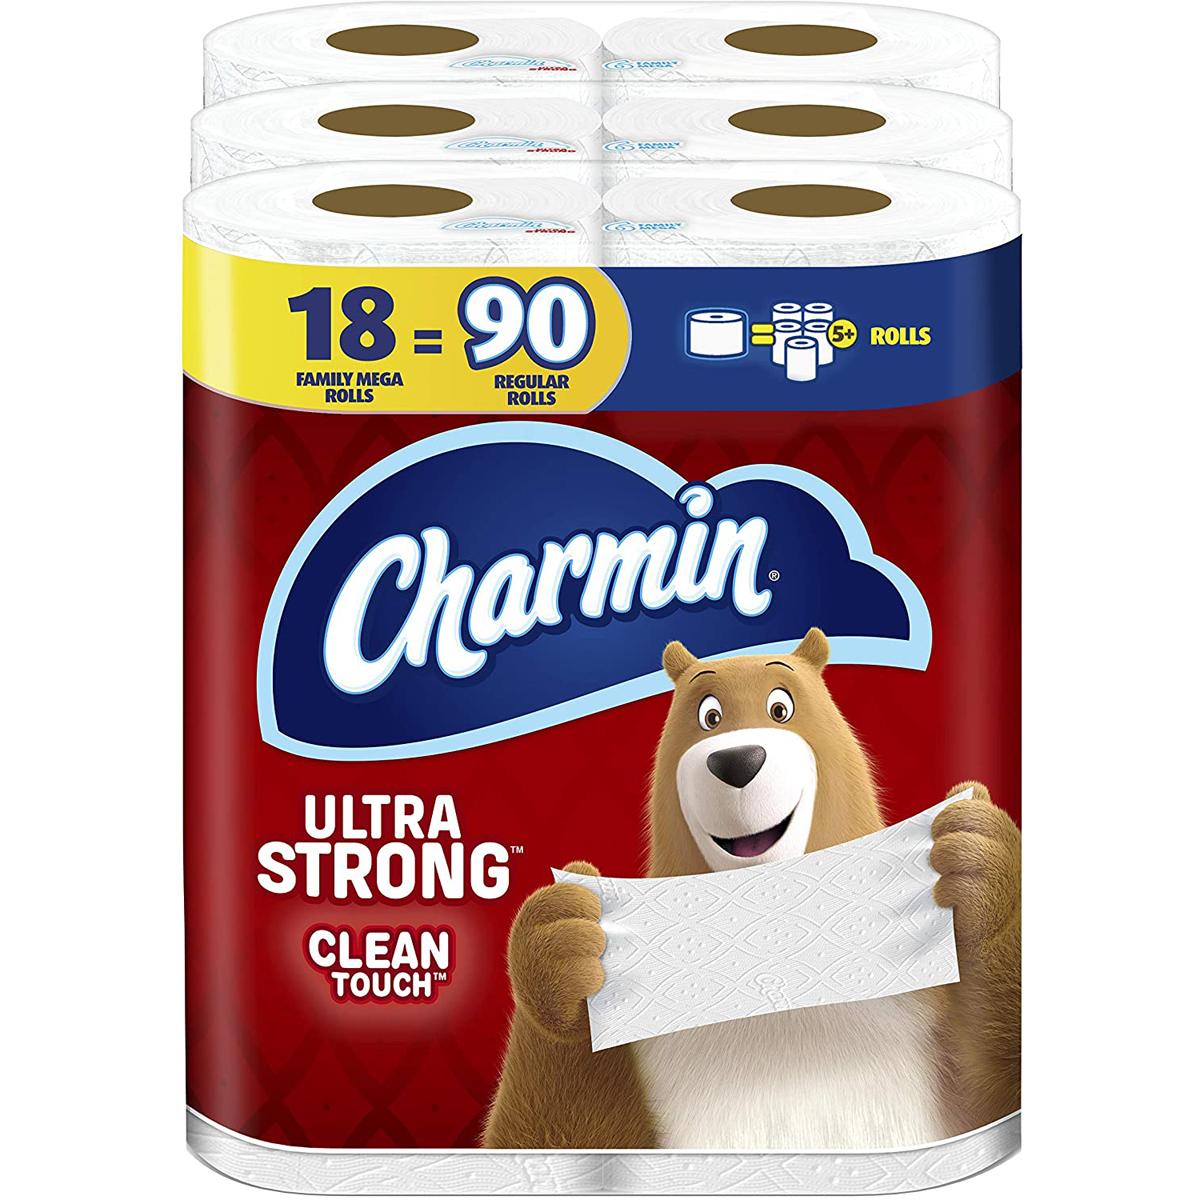 36 Charmin Family Mega Toilet Paper Rolls for $31.48 Shipped